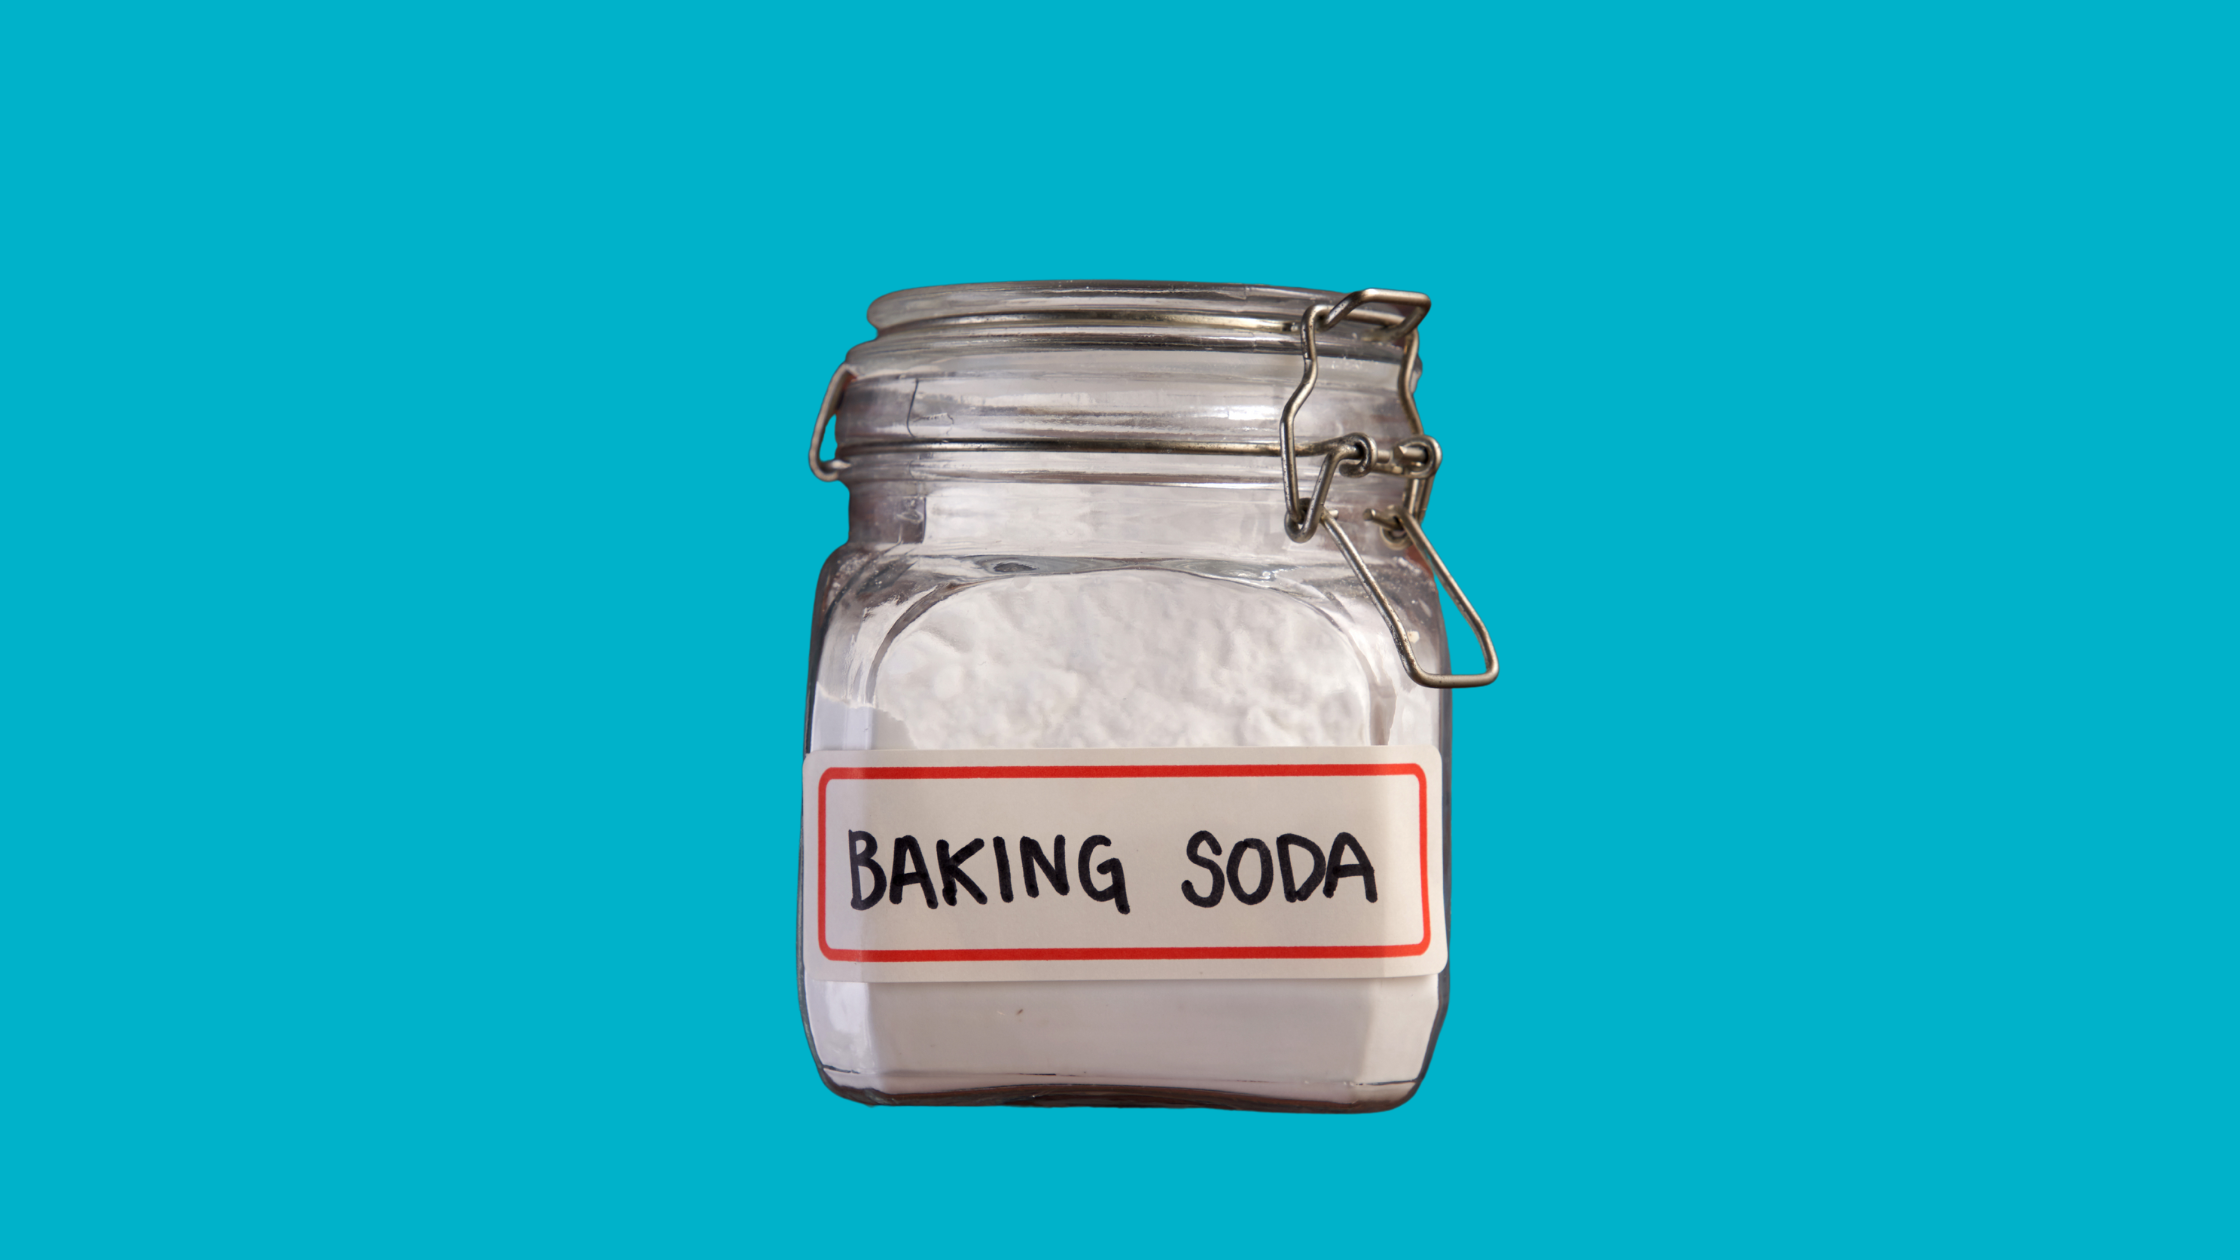 Baking Soda